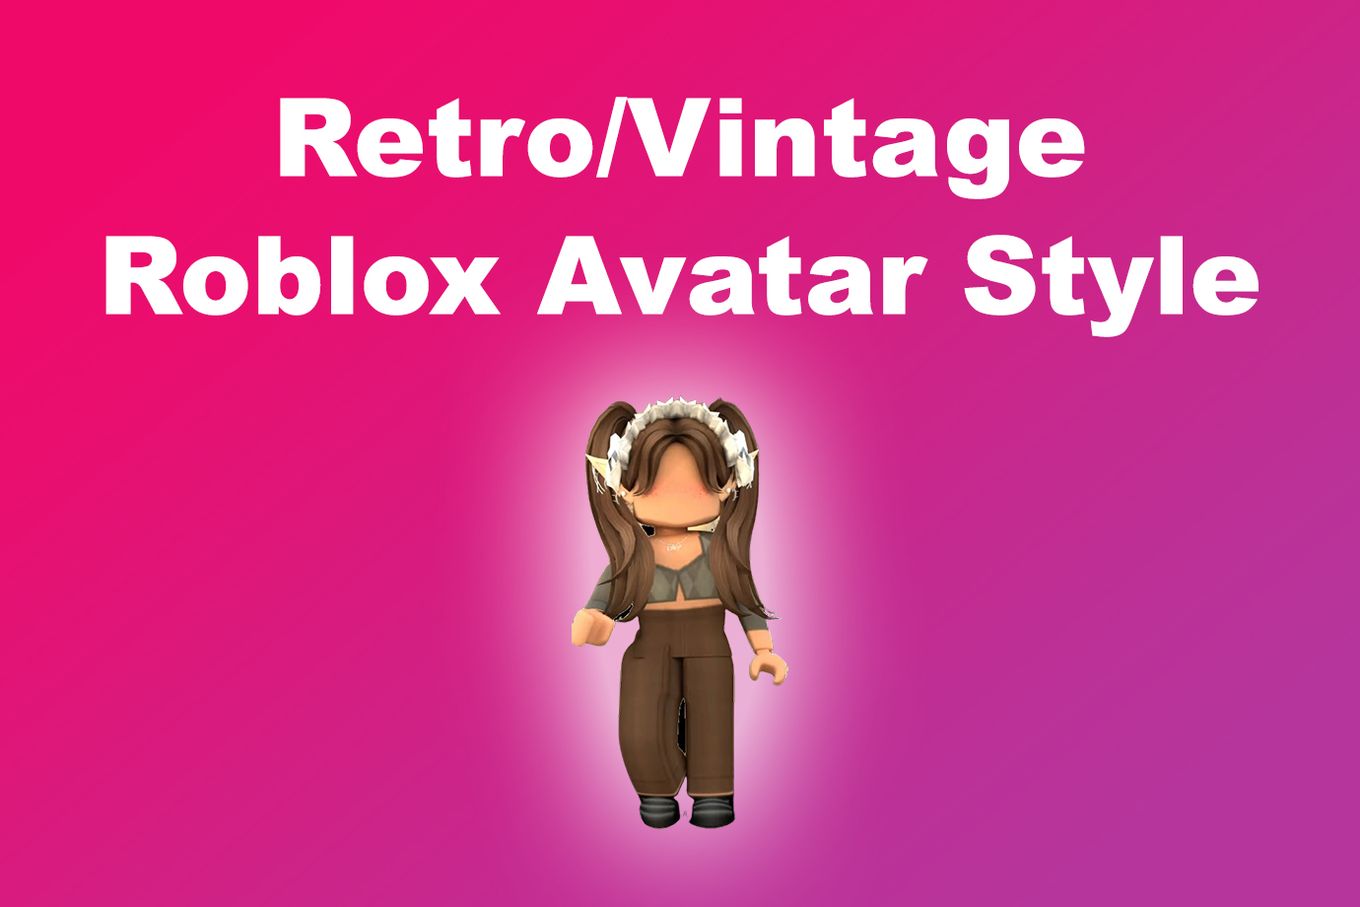 Retro or Vintage Roblox Avatar Style